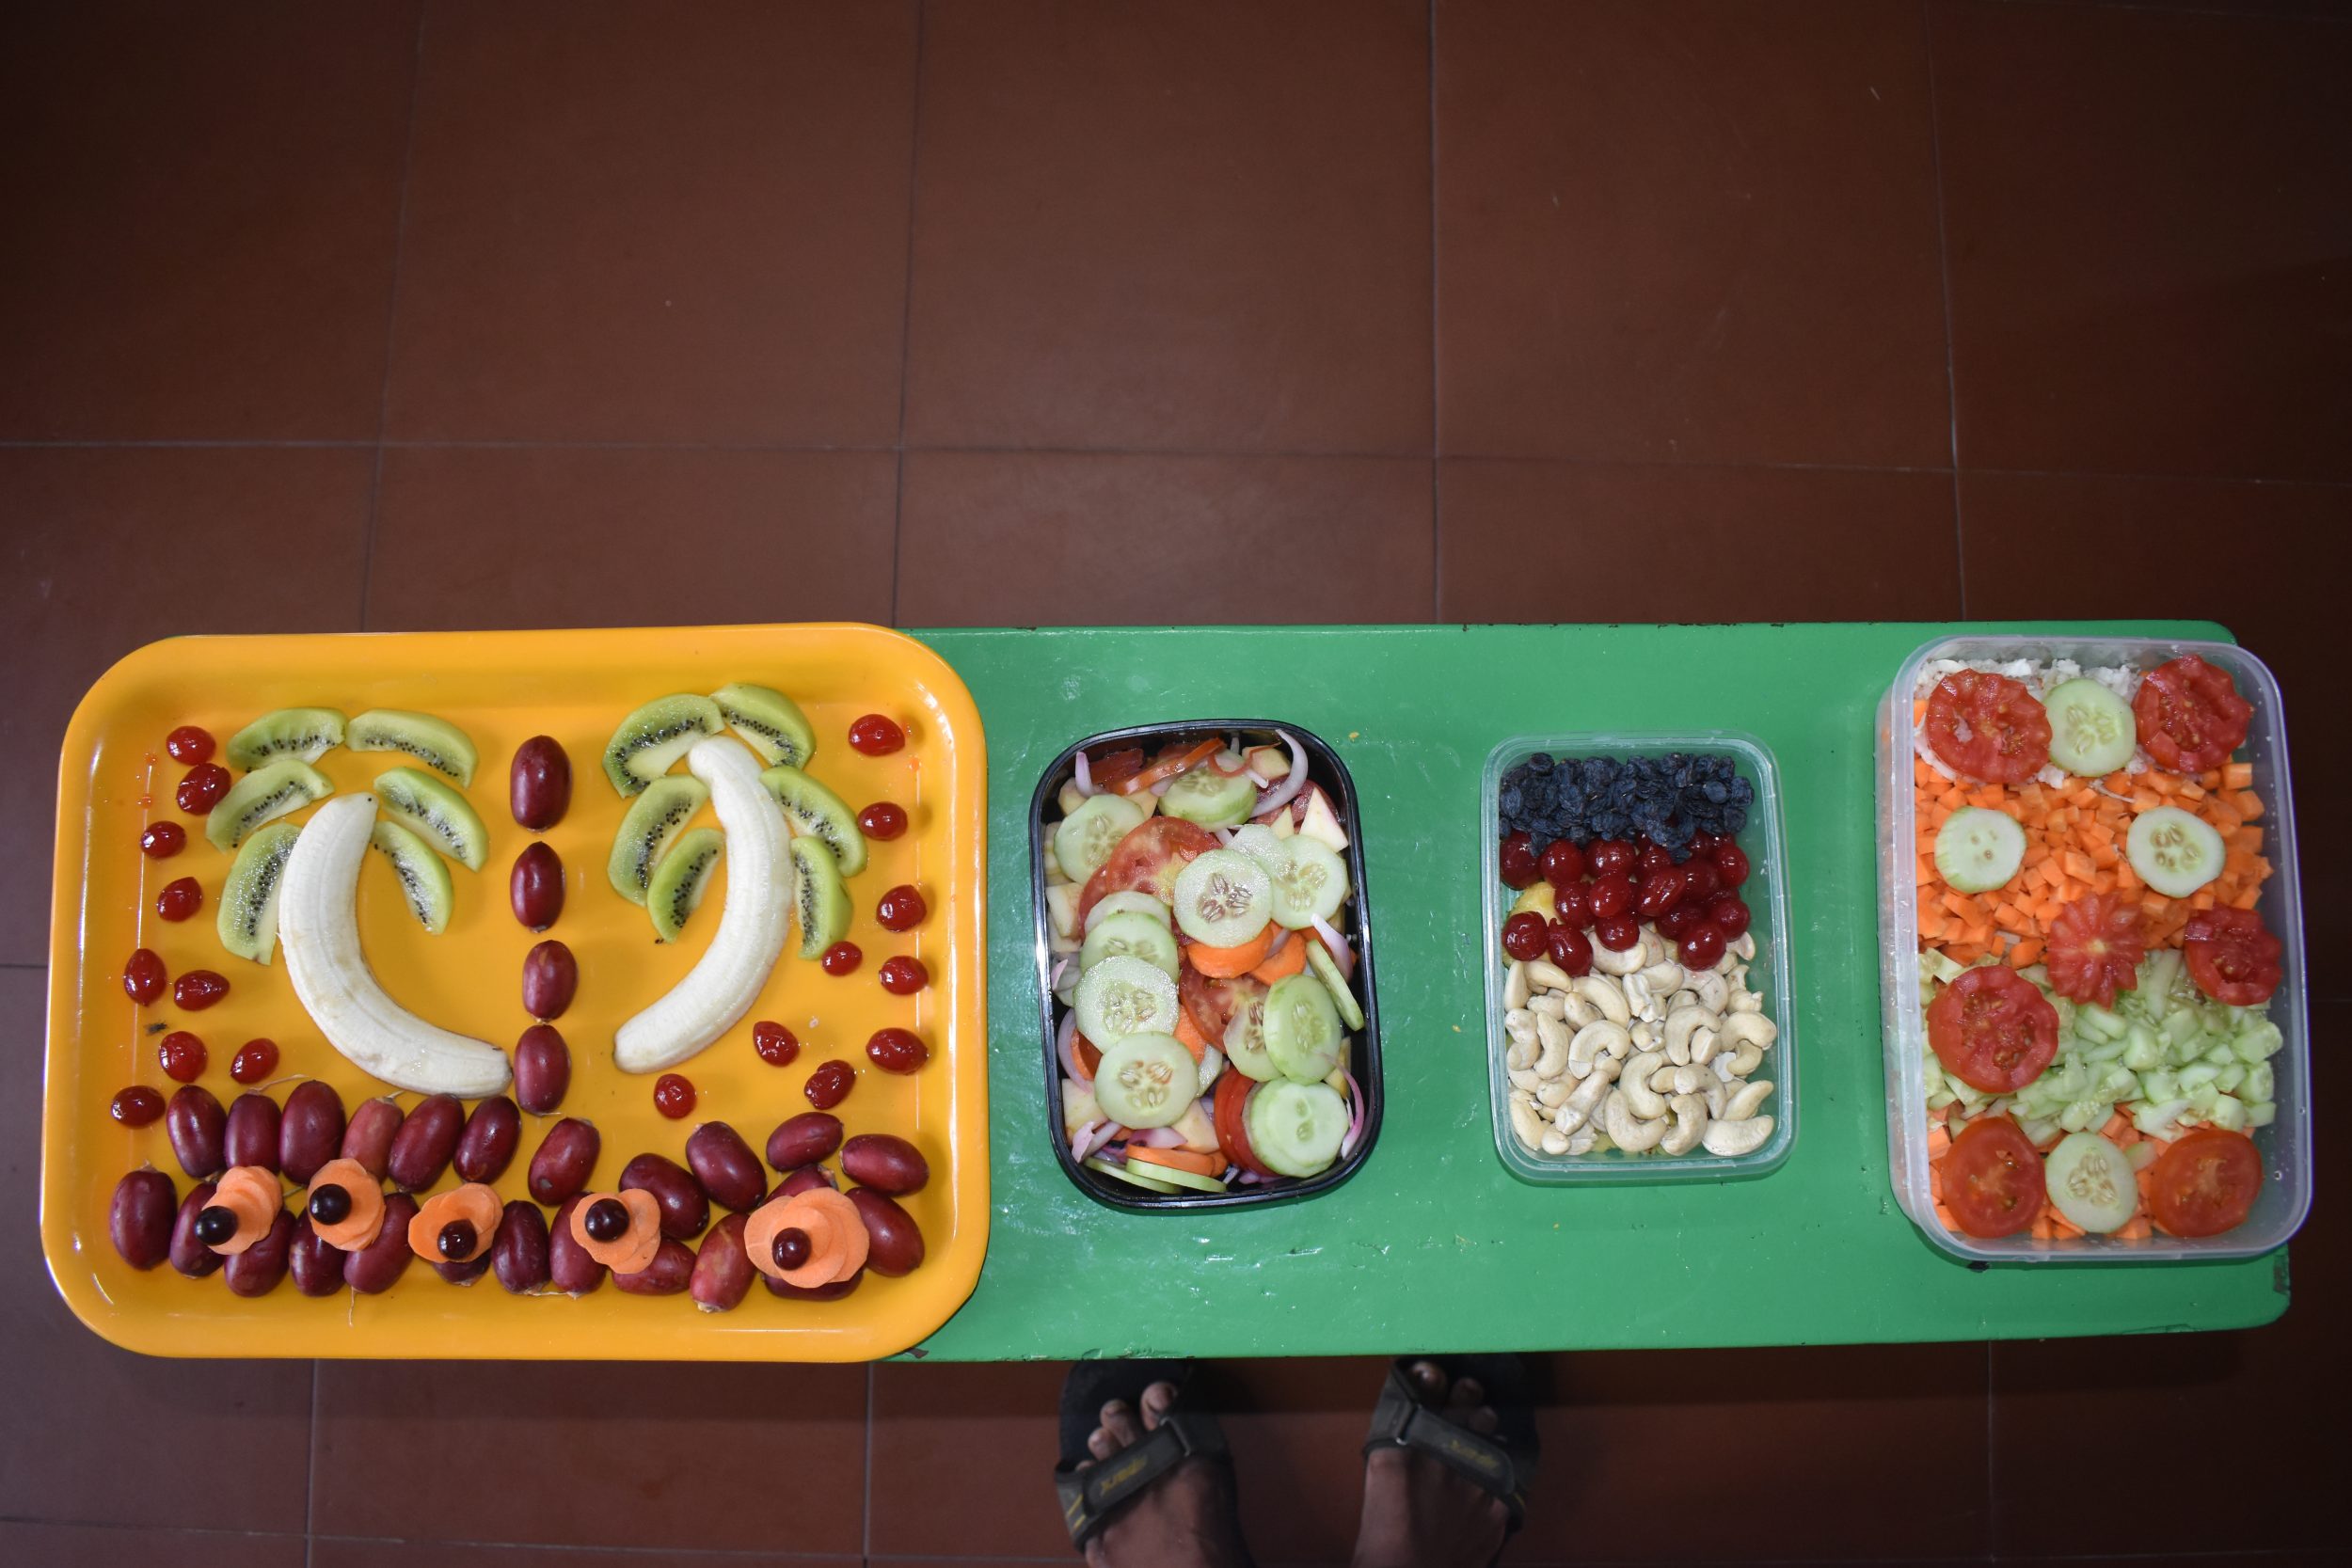 Salad day at Don Bosco Senior Secondary School Vaduthala